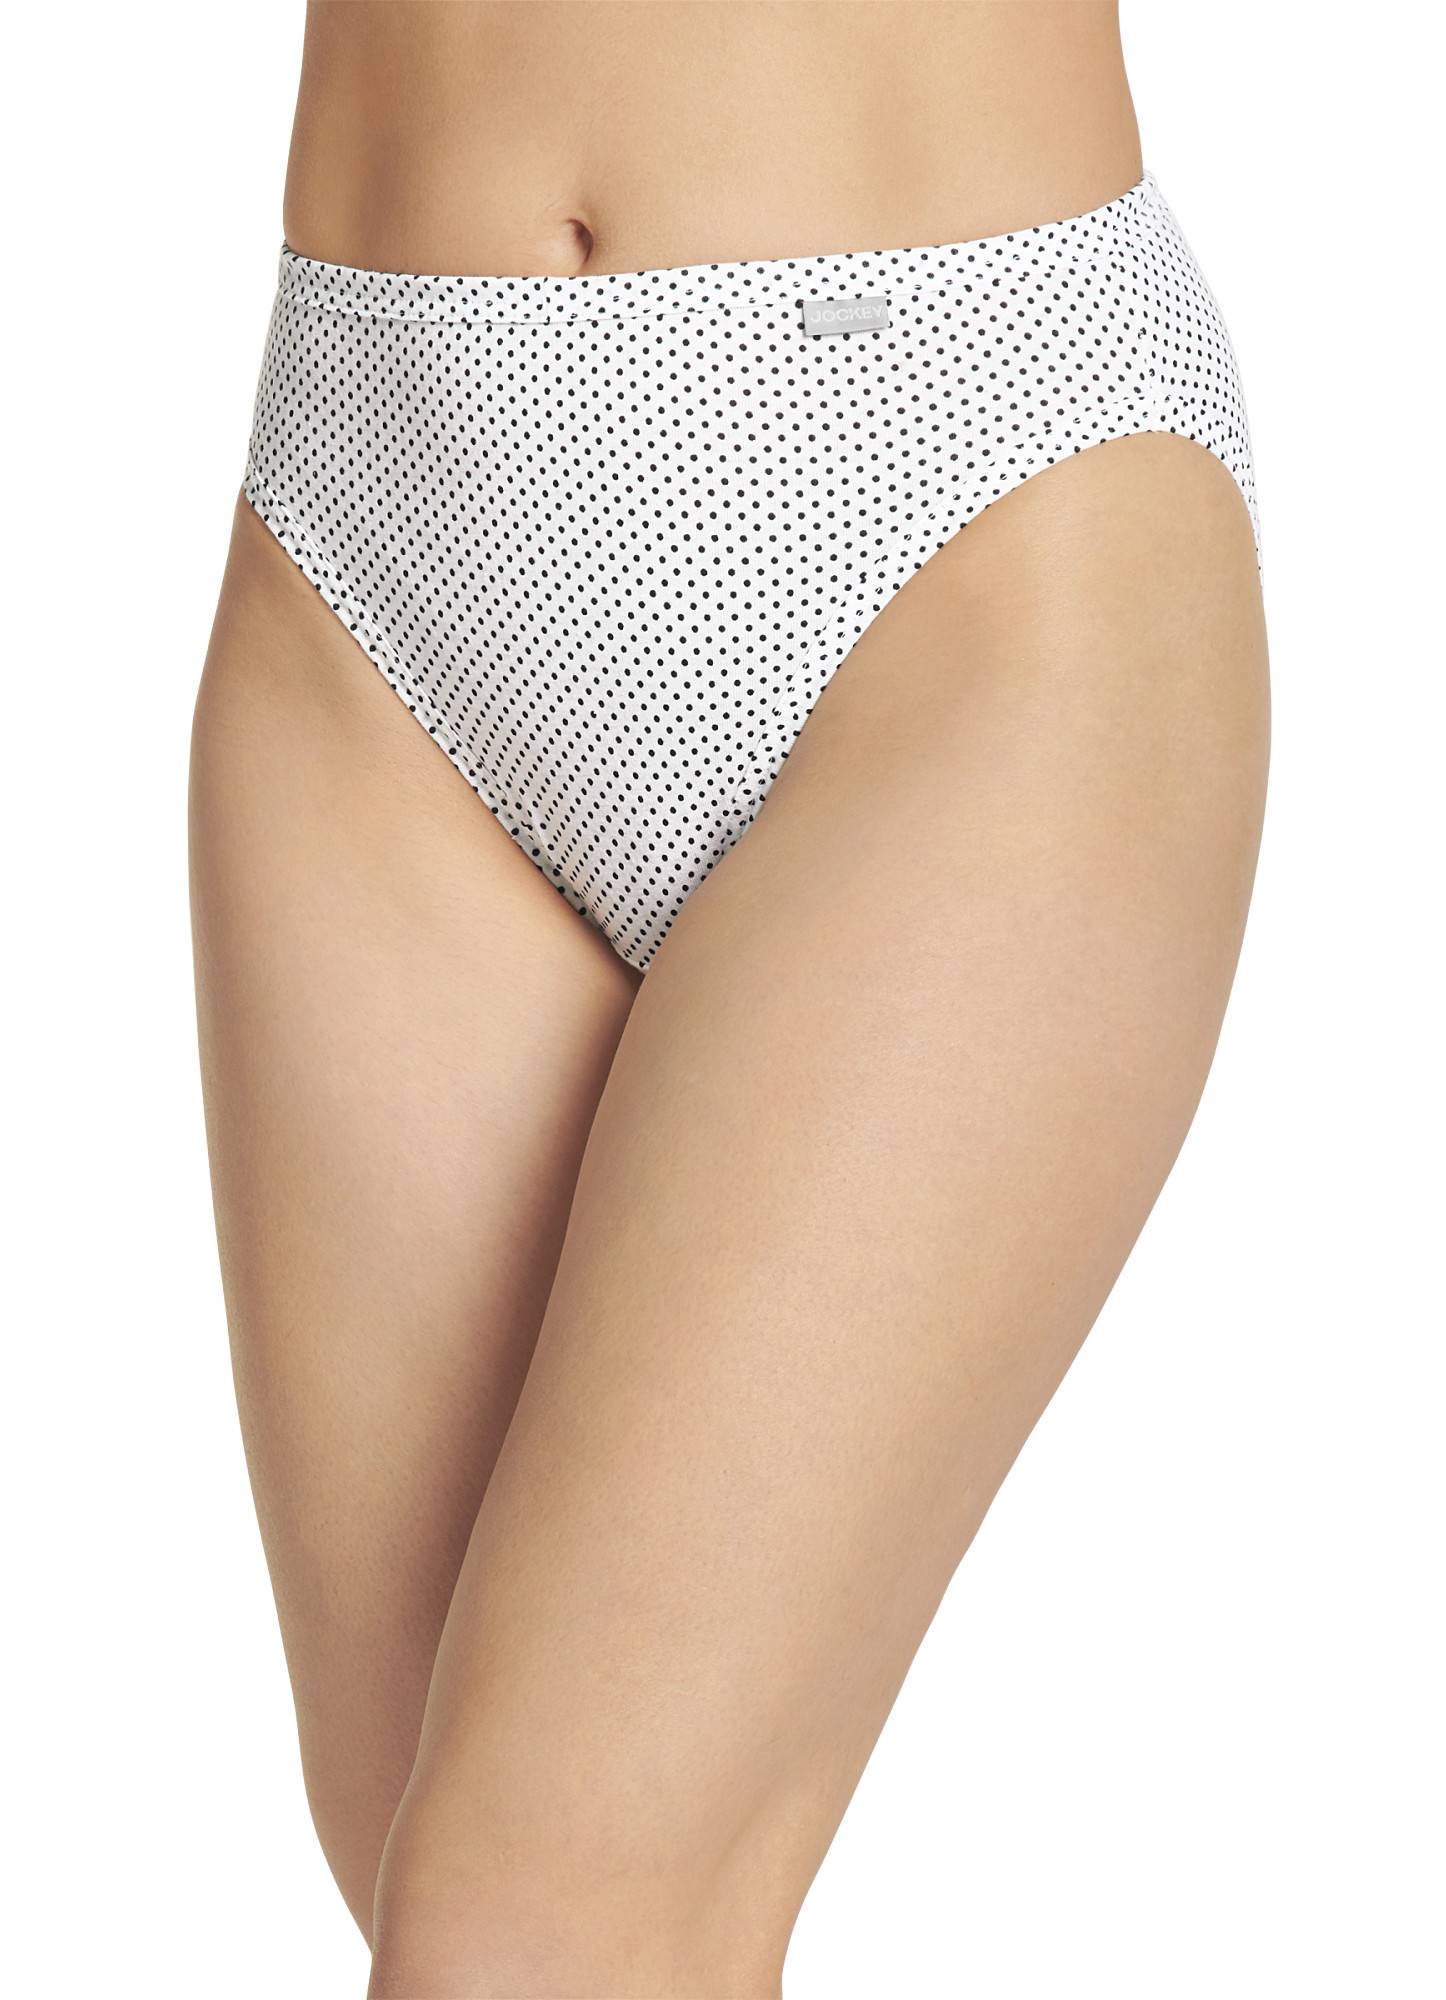 Jockey Women's Plus Size Cotton Underwear - Elance French Cut 3 Pack